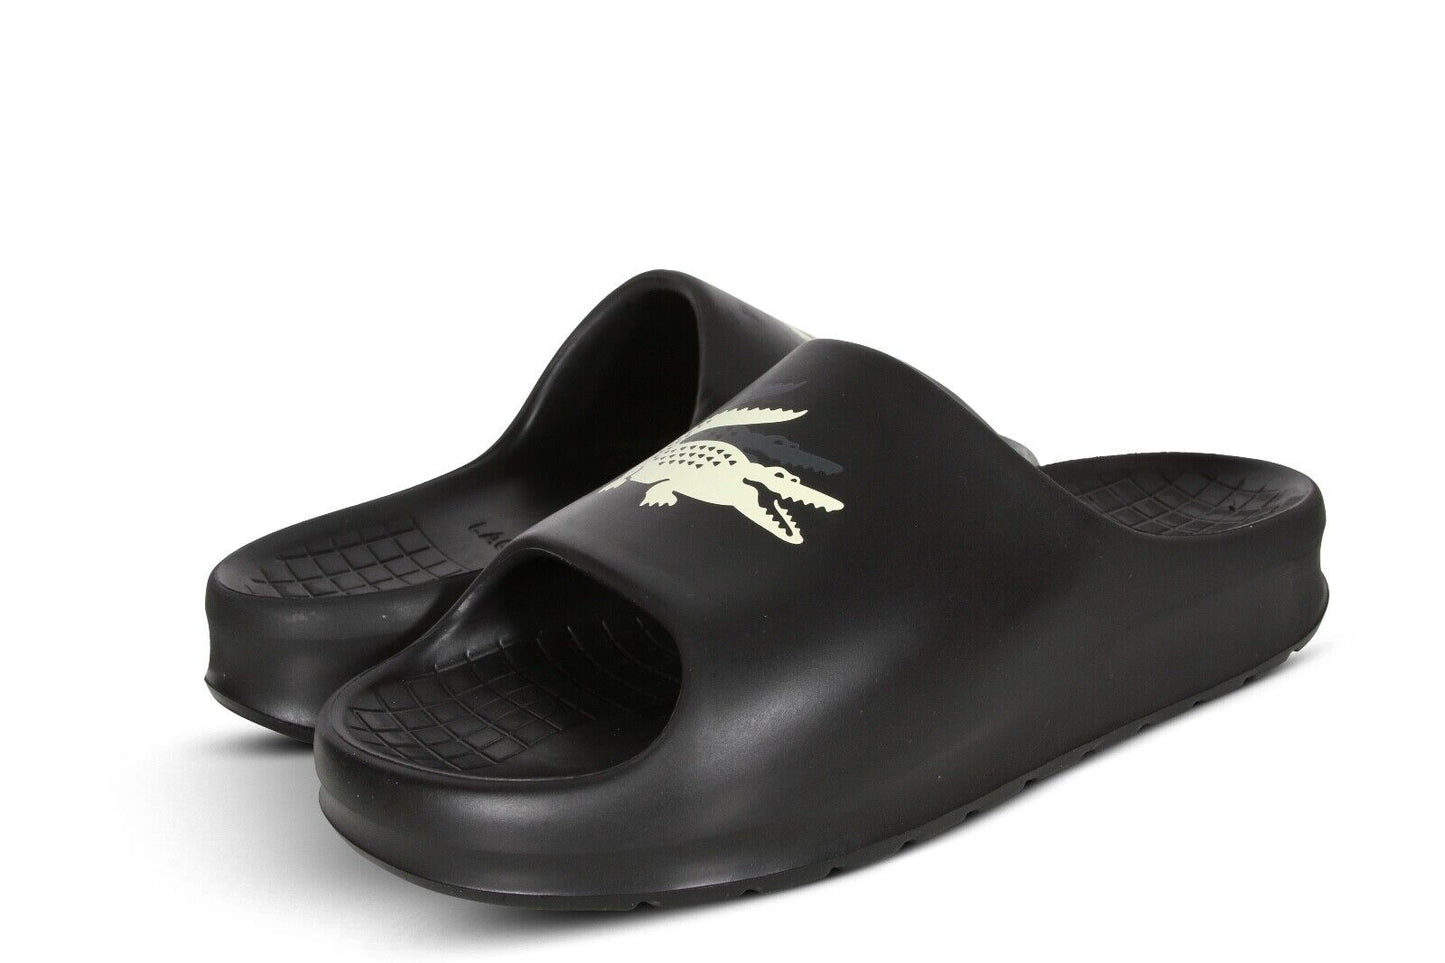 Lacoste Serve Slide 2.0 123 1 Men's Sandals in Black and Off White 745CMA0005454